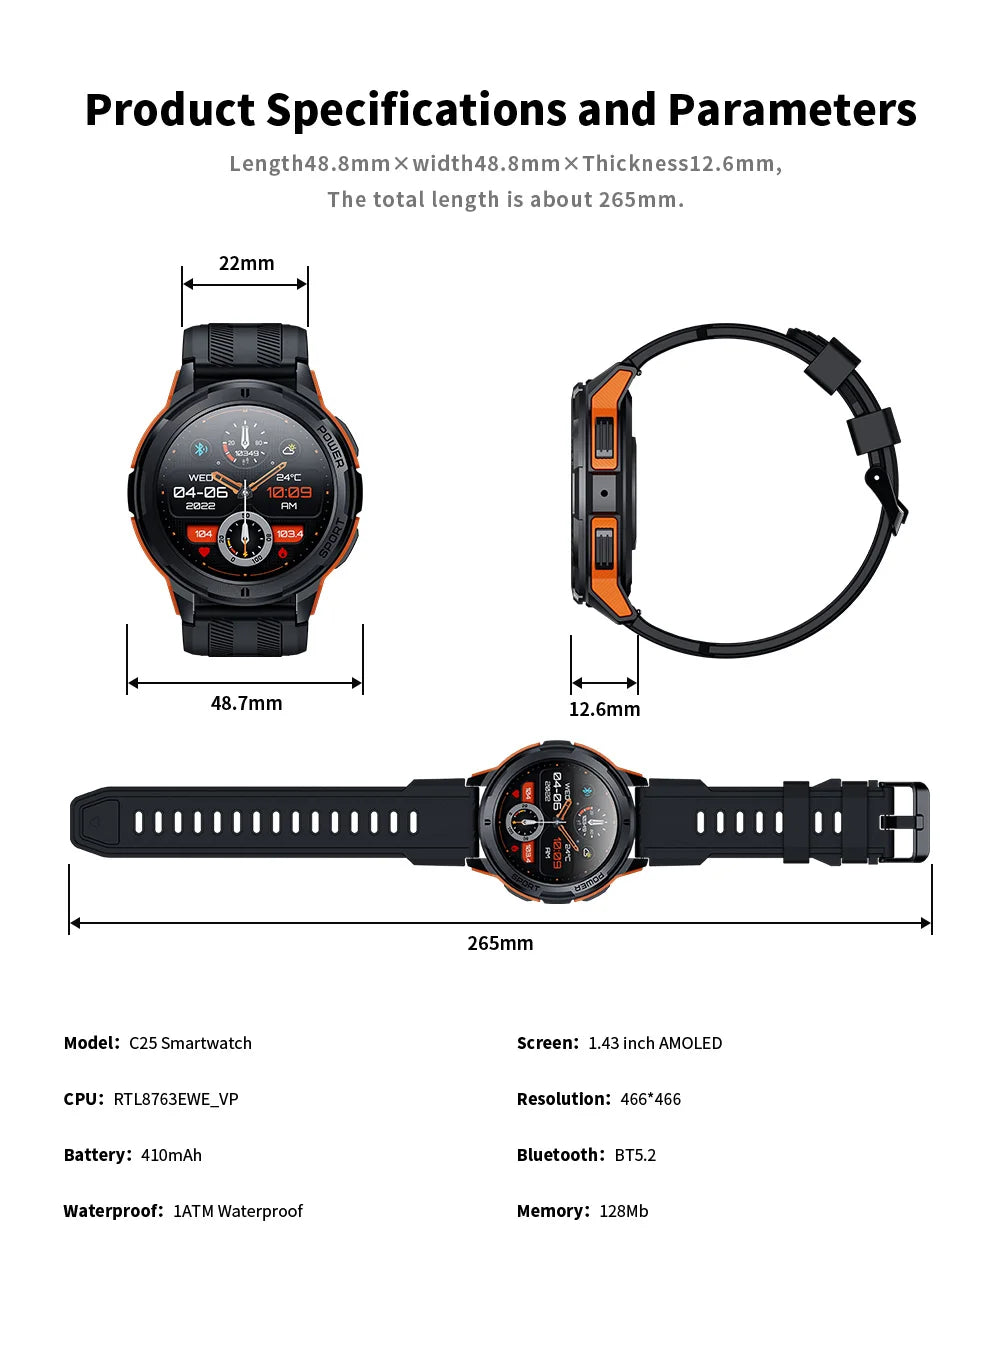 Oukitel BT10 Sport Smart Watch For Men